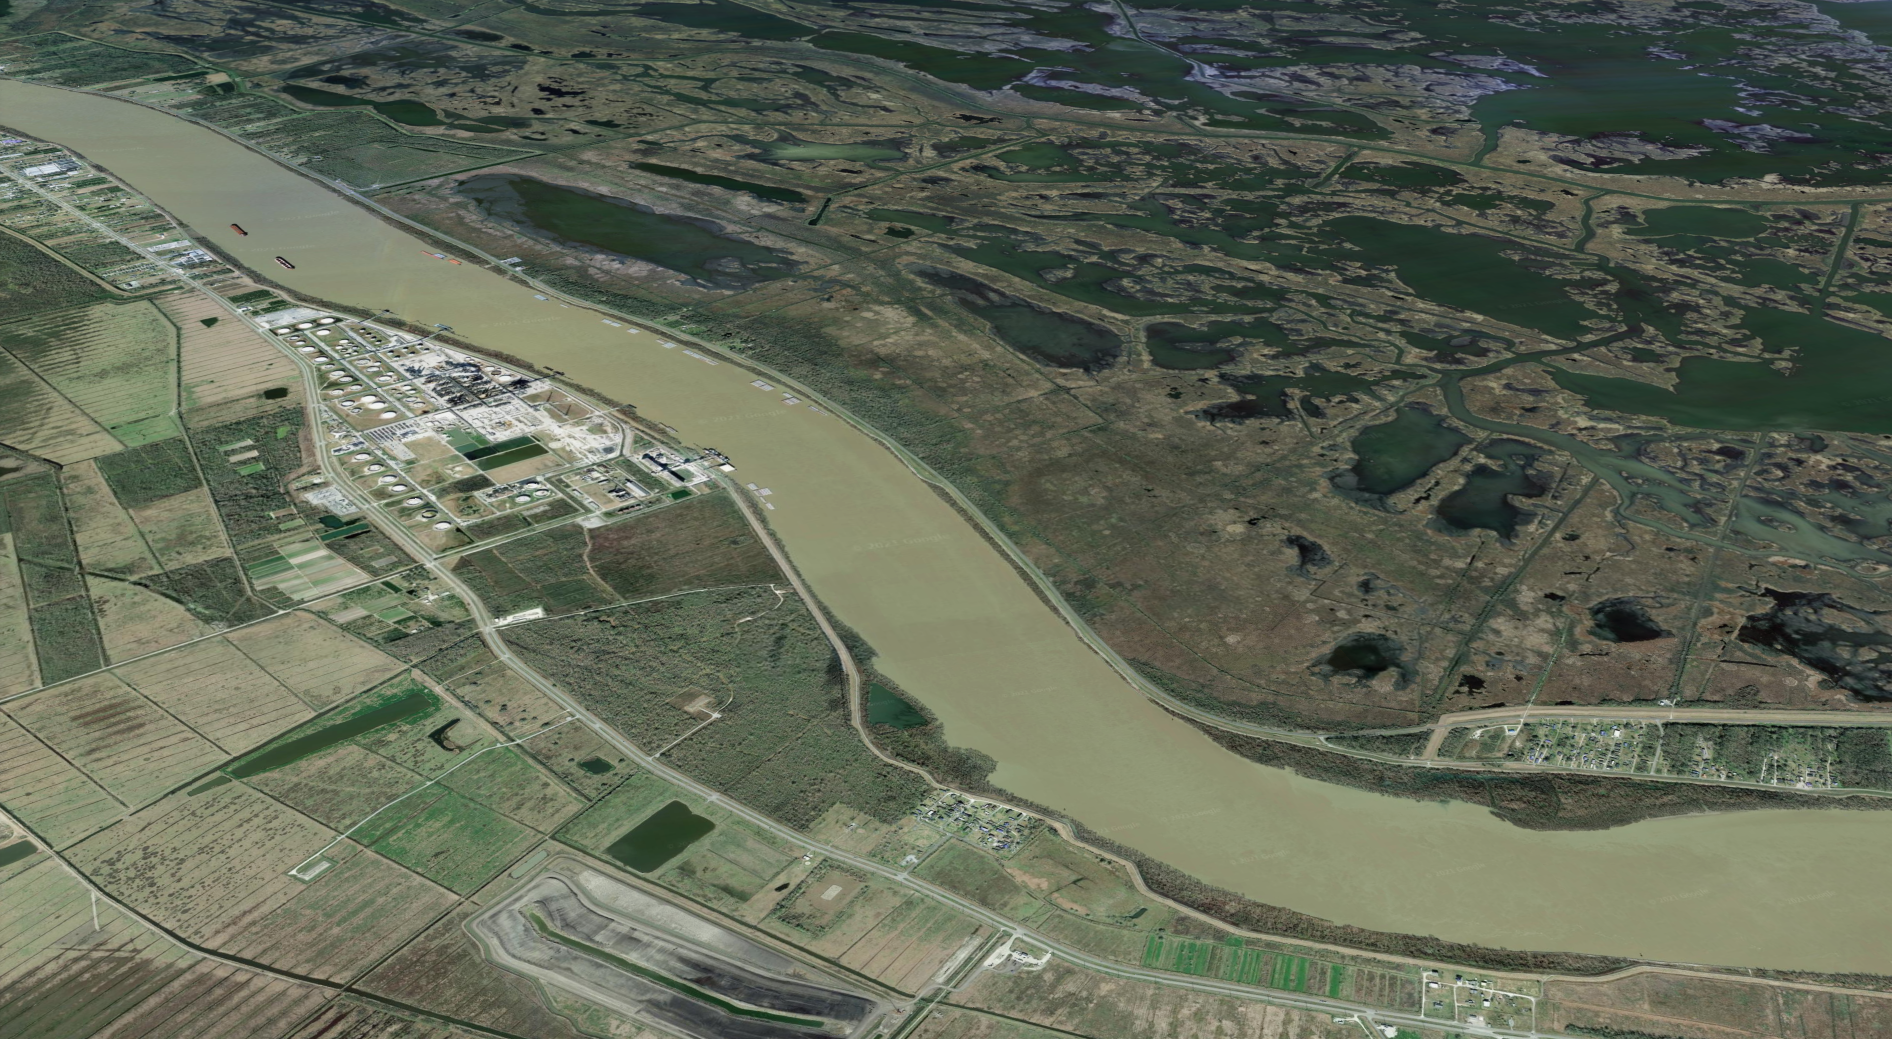 An aerial shot shows the Mississipi River at a tilt.